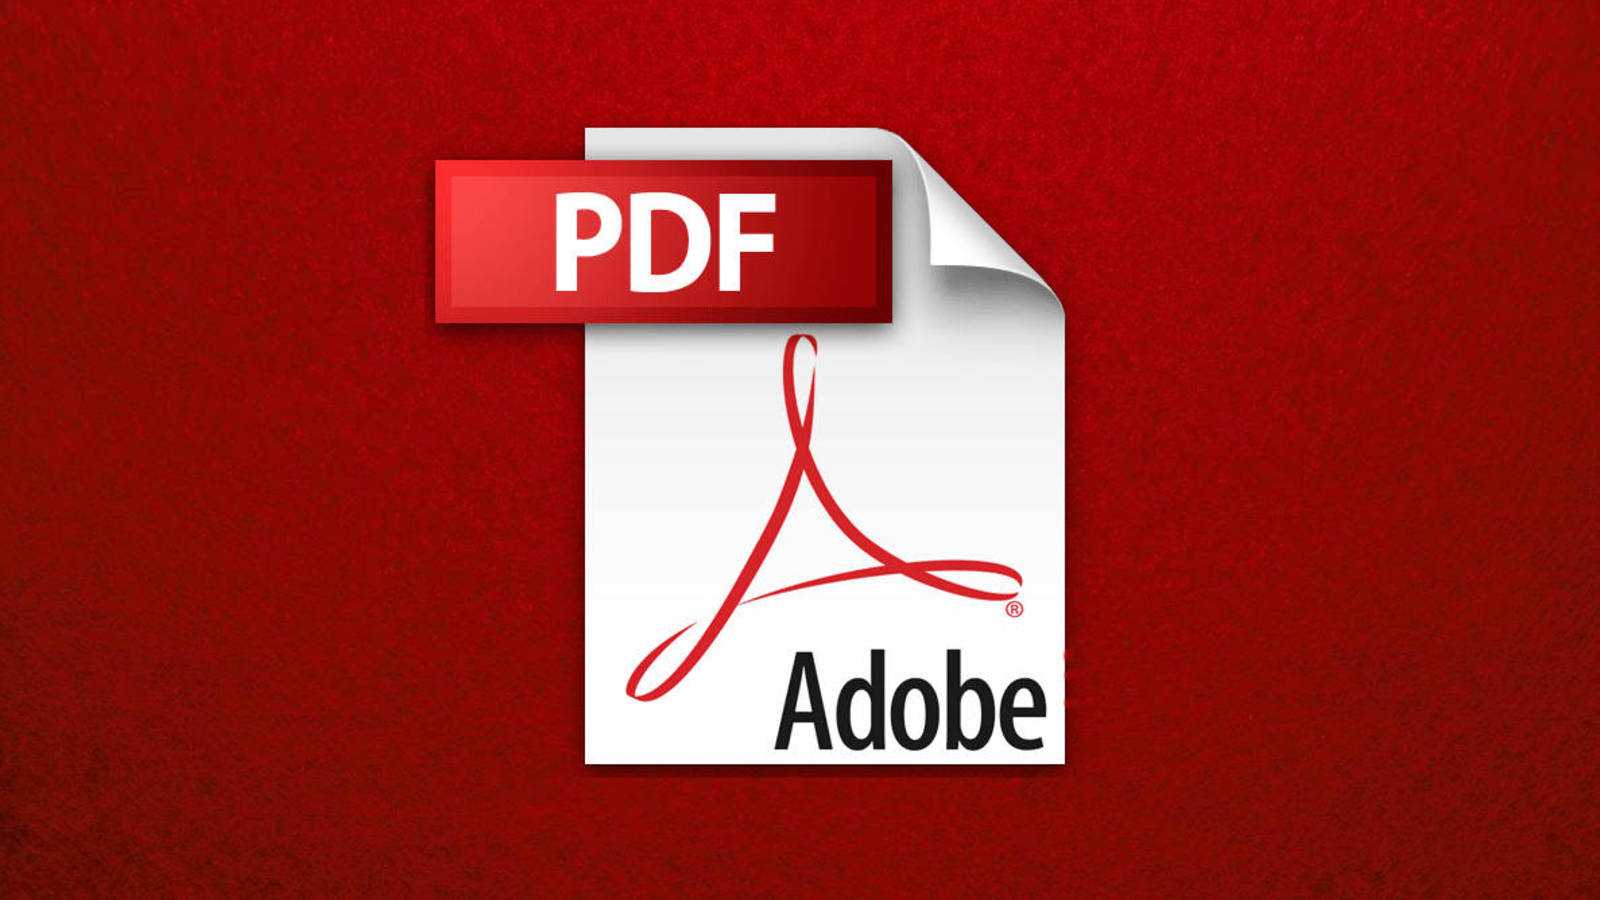 Pengertian PDF (Portable Document Format)